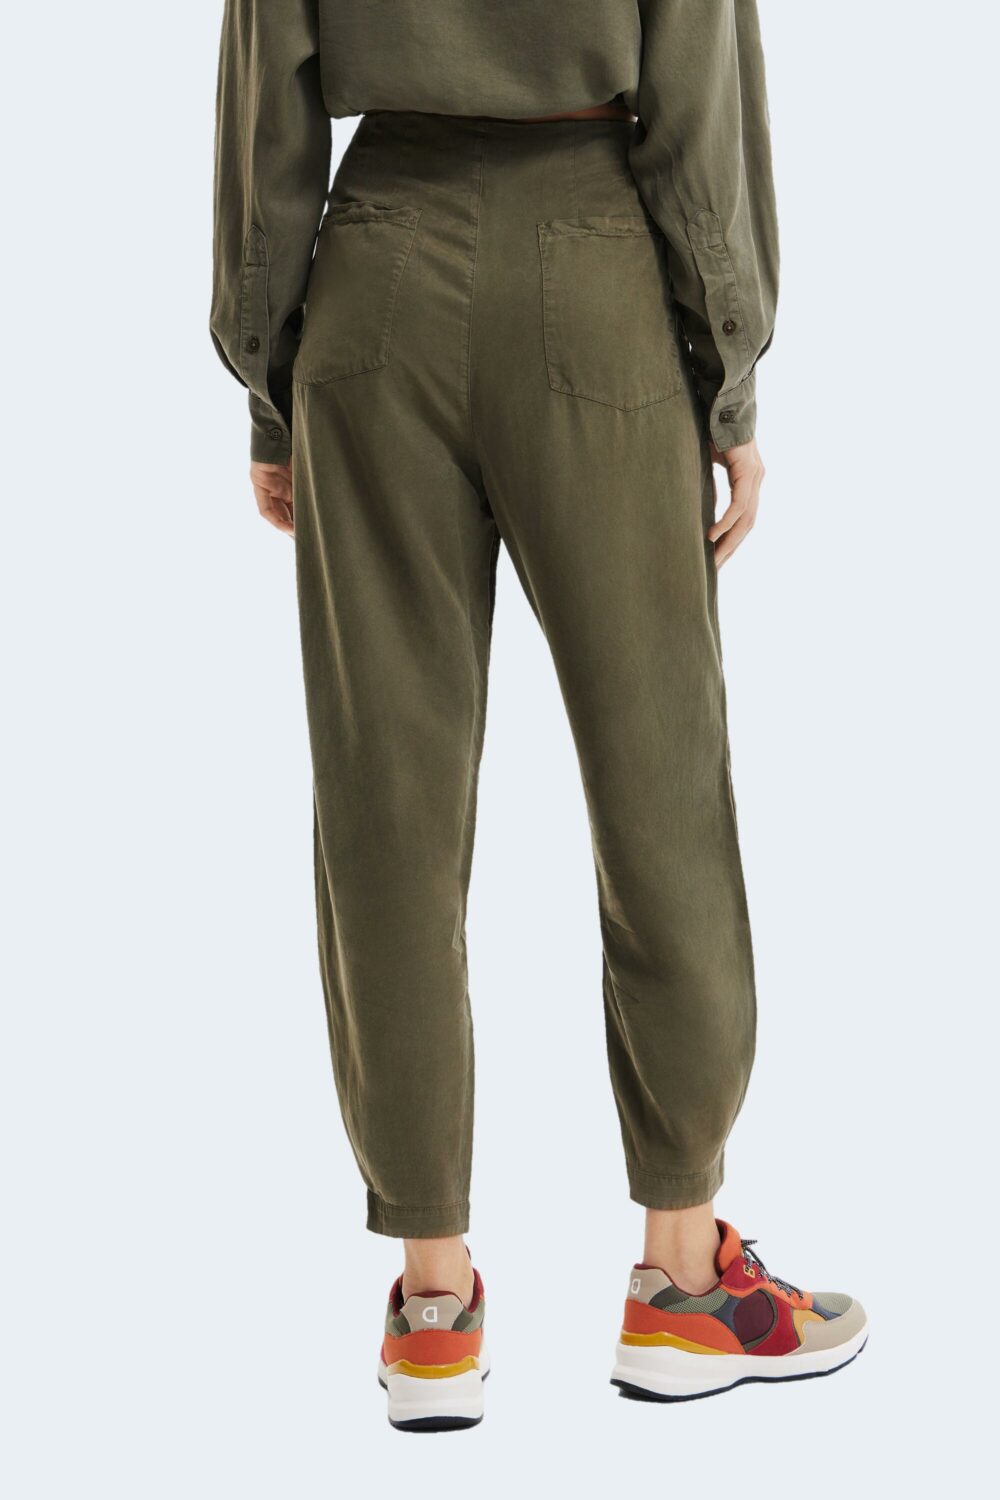 Pantaloni Desigual SOLID Verde - Foto 3